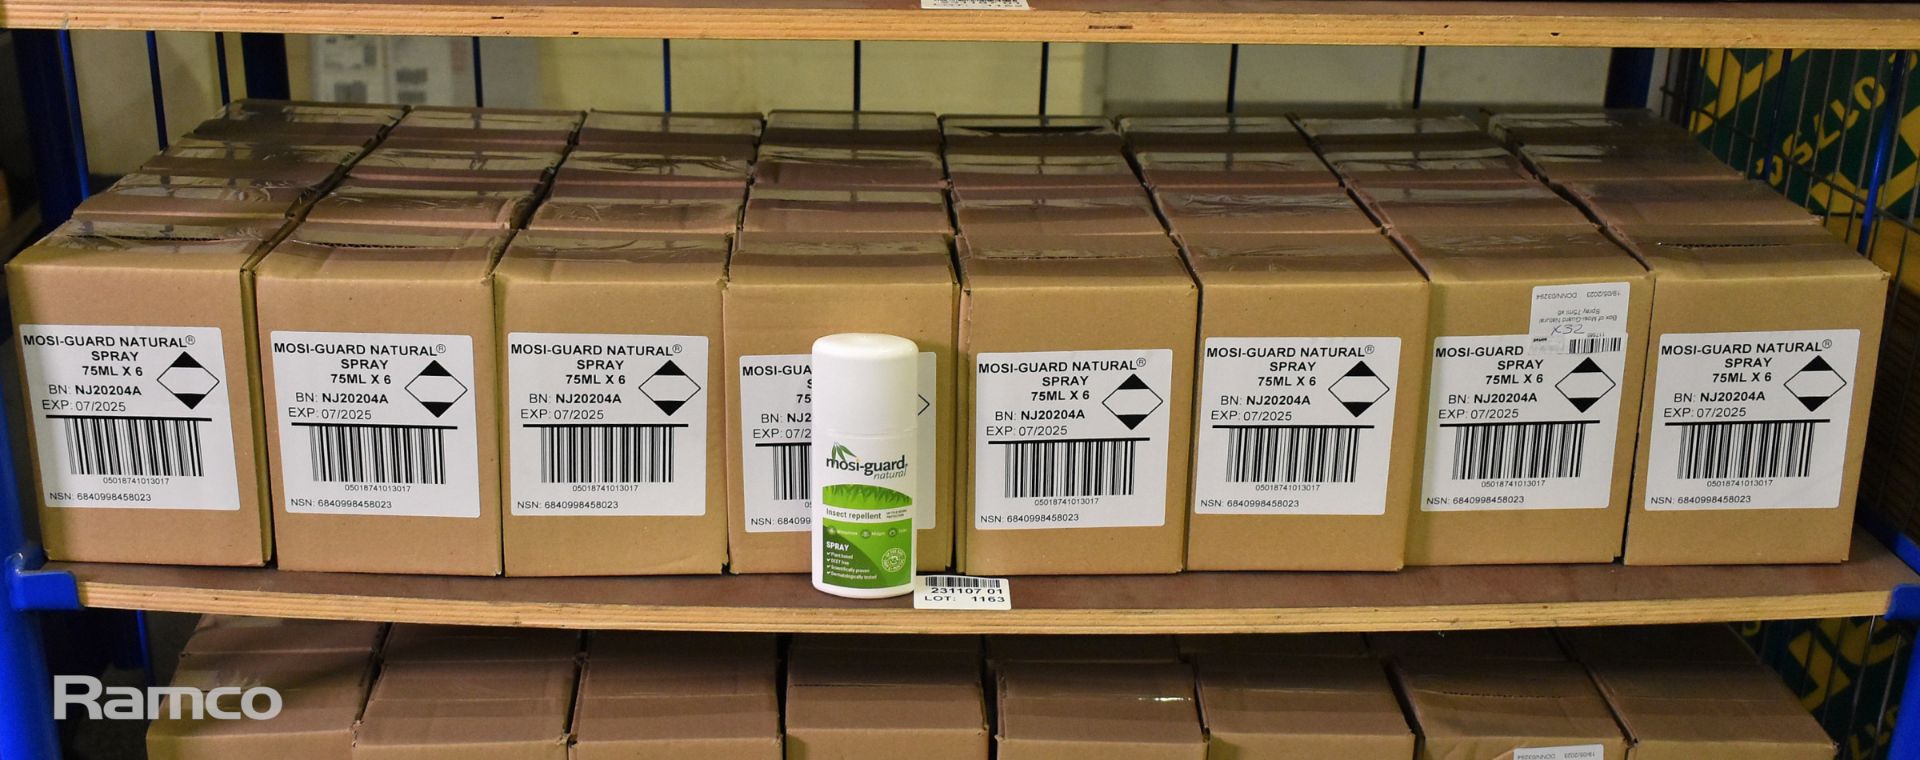 32x boxes of Mosi-Guard Natural Spray - 6x 75ml bottles per box - Image 2 of 3